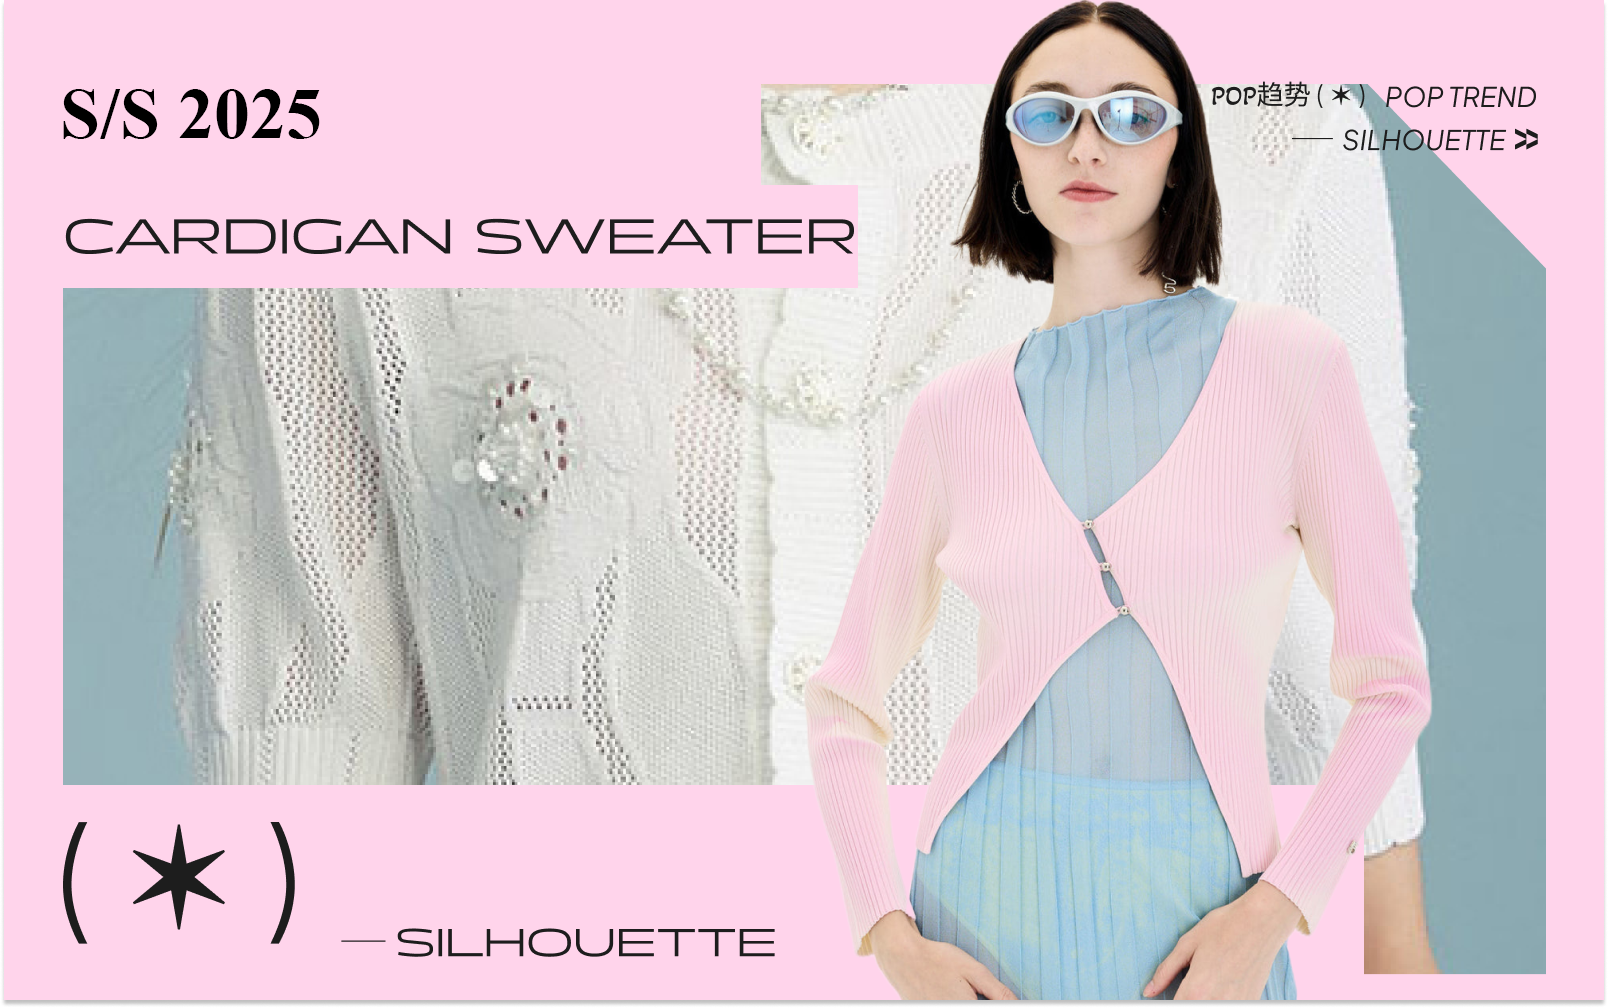 Youthful Cardigan -- S/S 2025 Silhouette Trend for Women's Knitwear